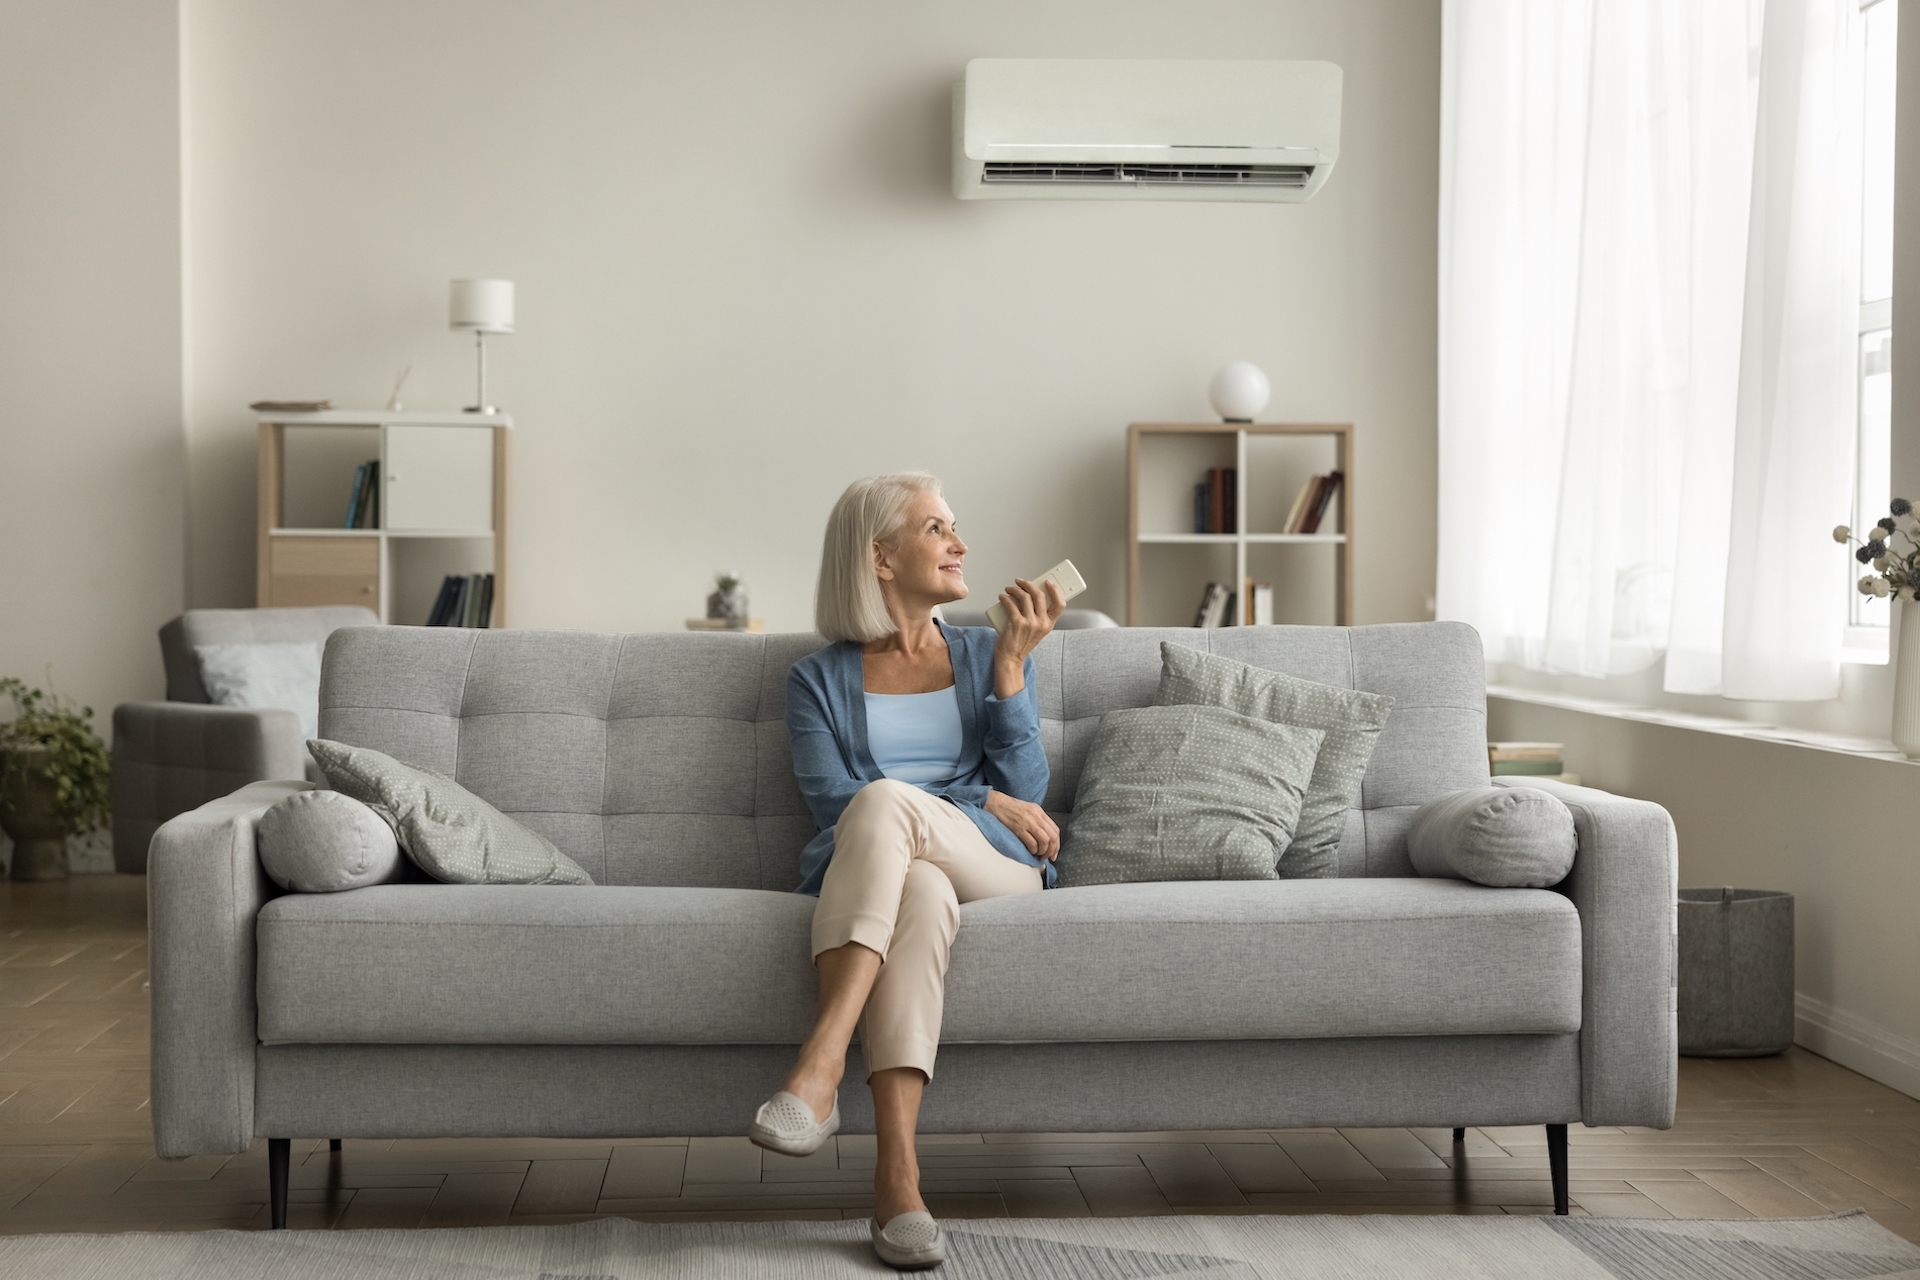 older women turning on the mini split heat pump in her living room